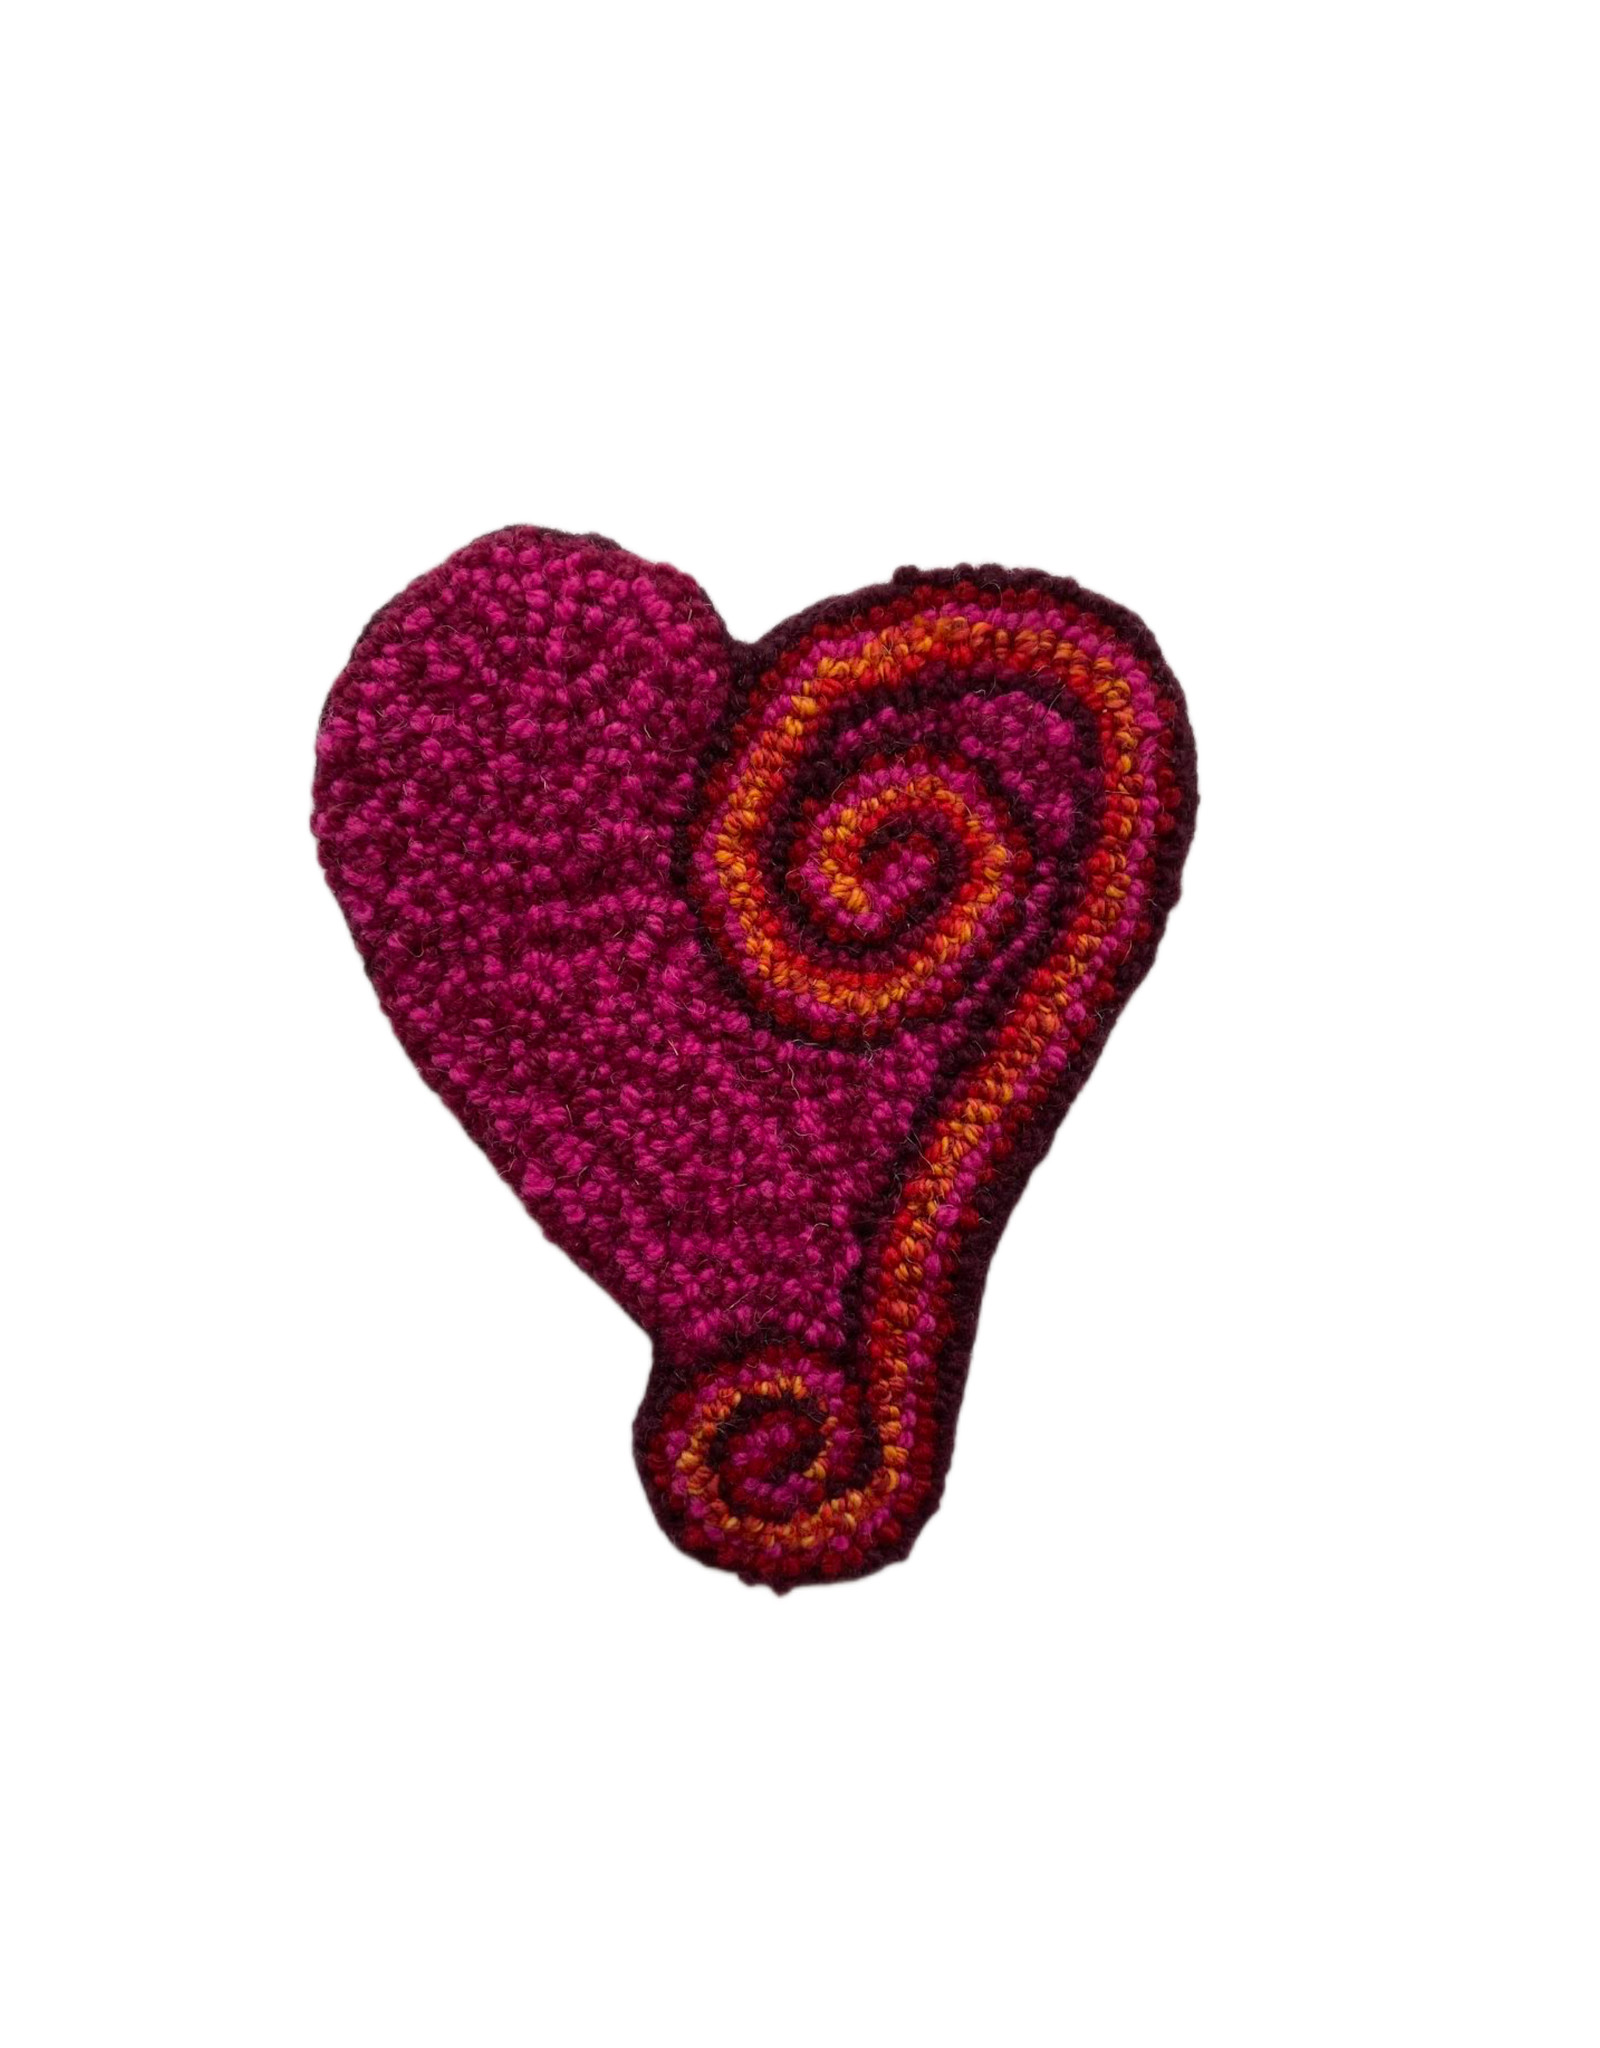 Donna MacRury Whimsical Heart Trivet by Donna MacRury